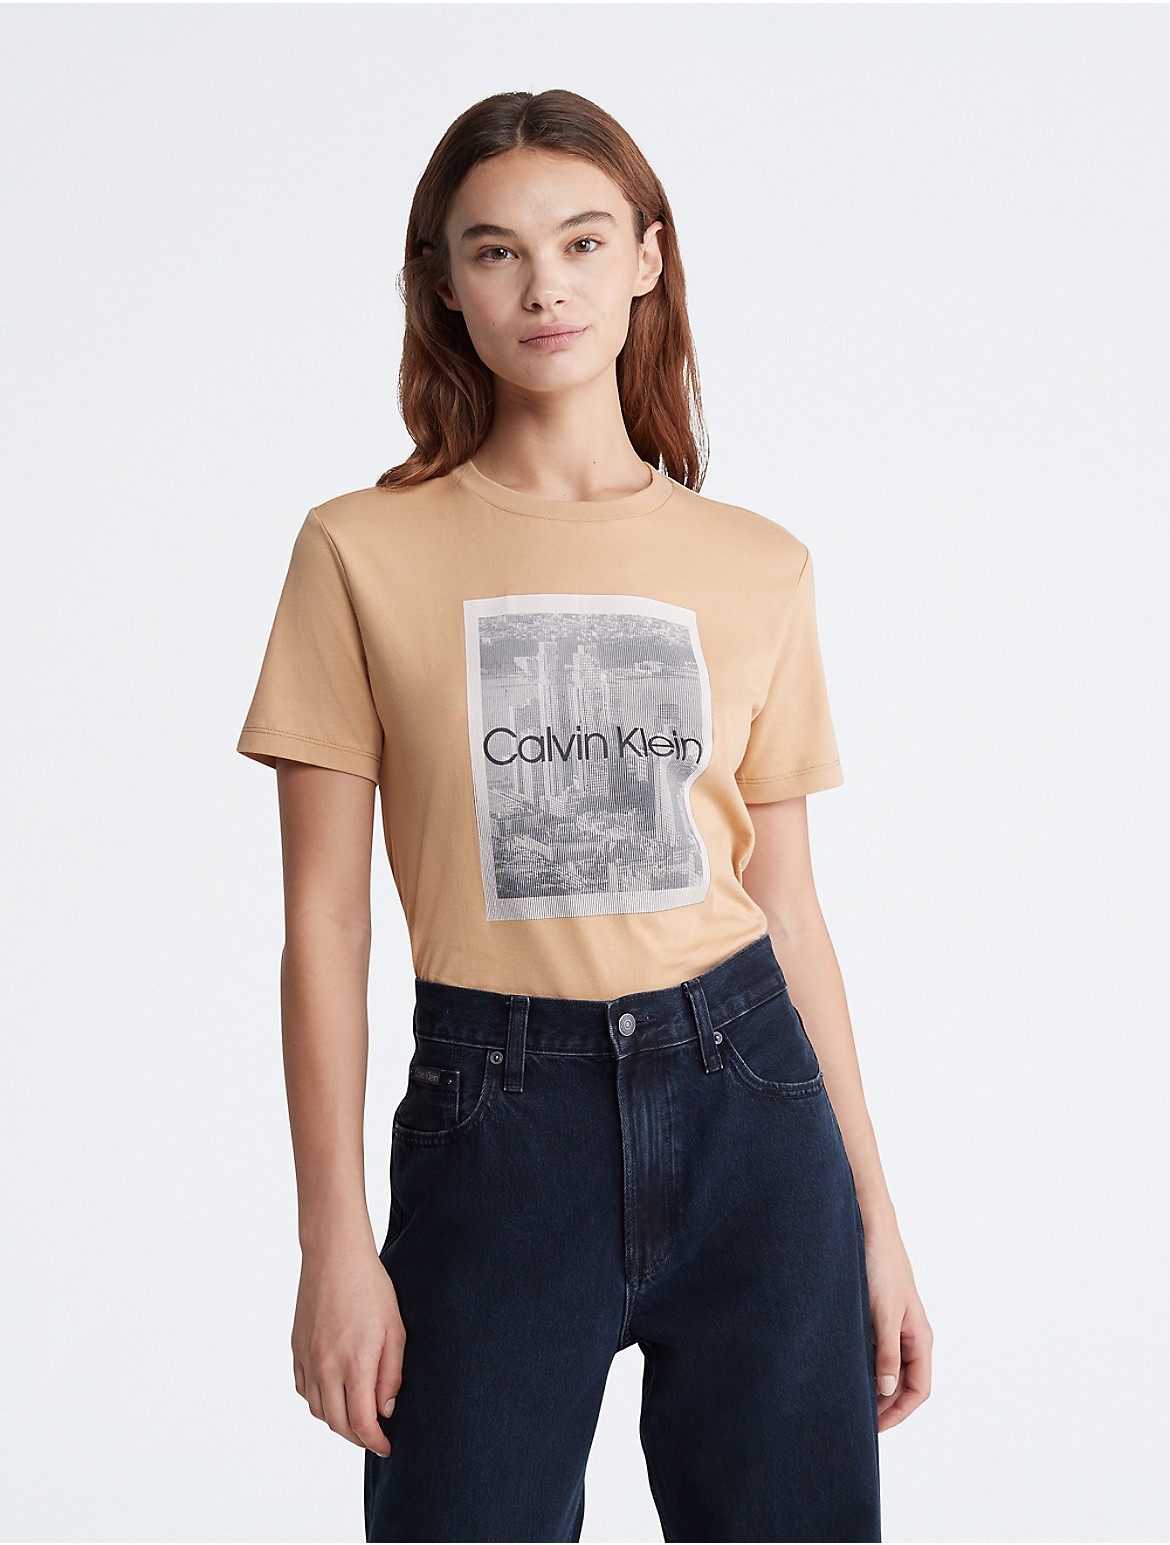 Calvin Klein Women's City Graphic Crewneck T-Shirt - Brown - XS